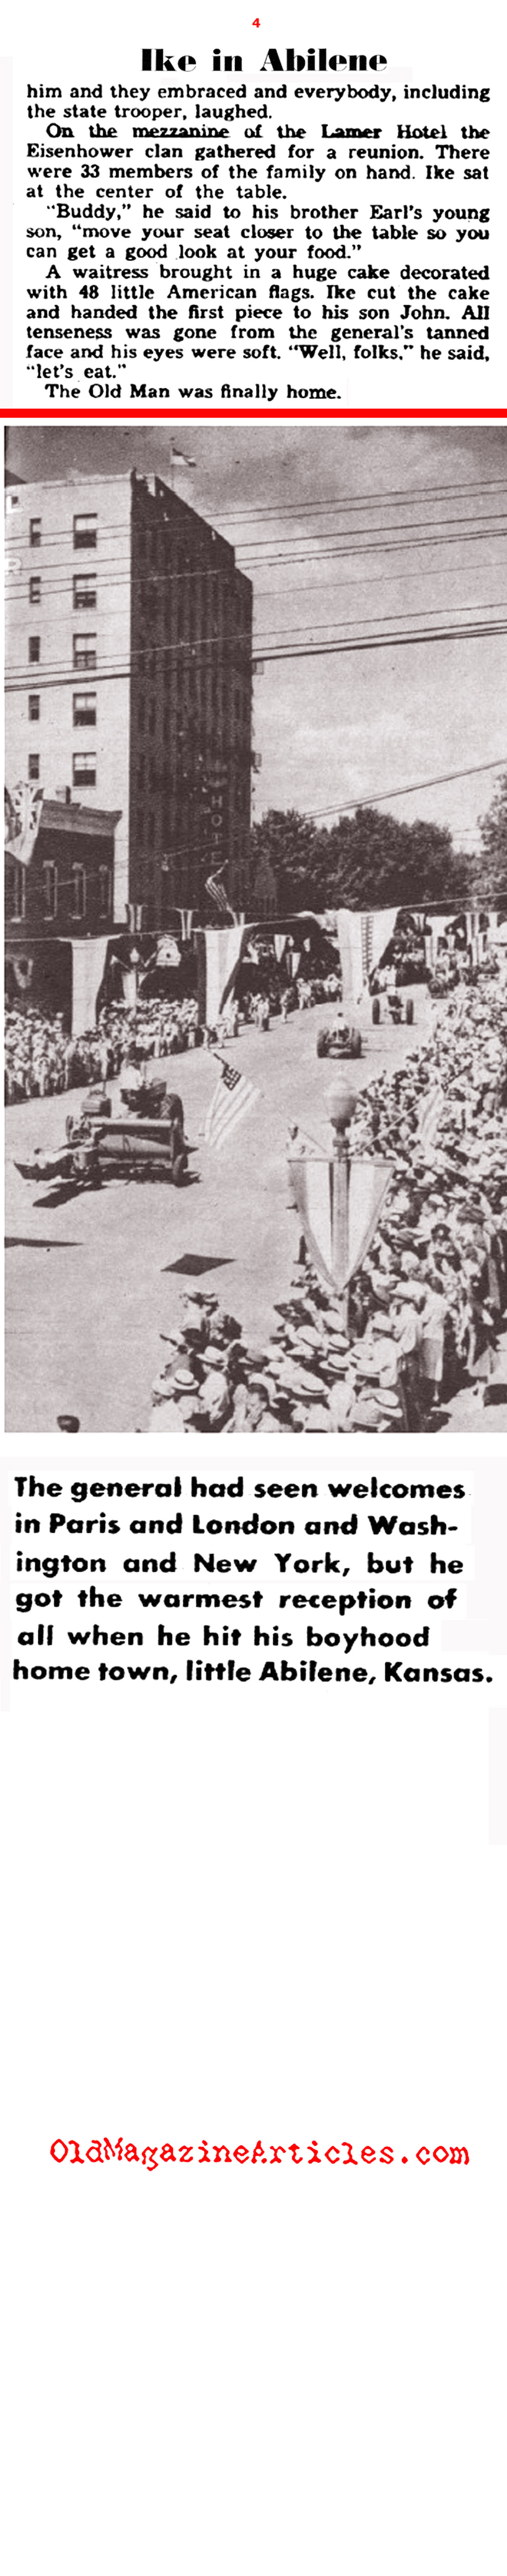 When General Eisenhower Came Home (Yank Magazine, 1945)